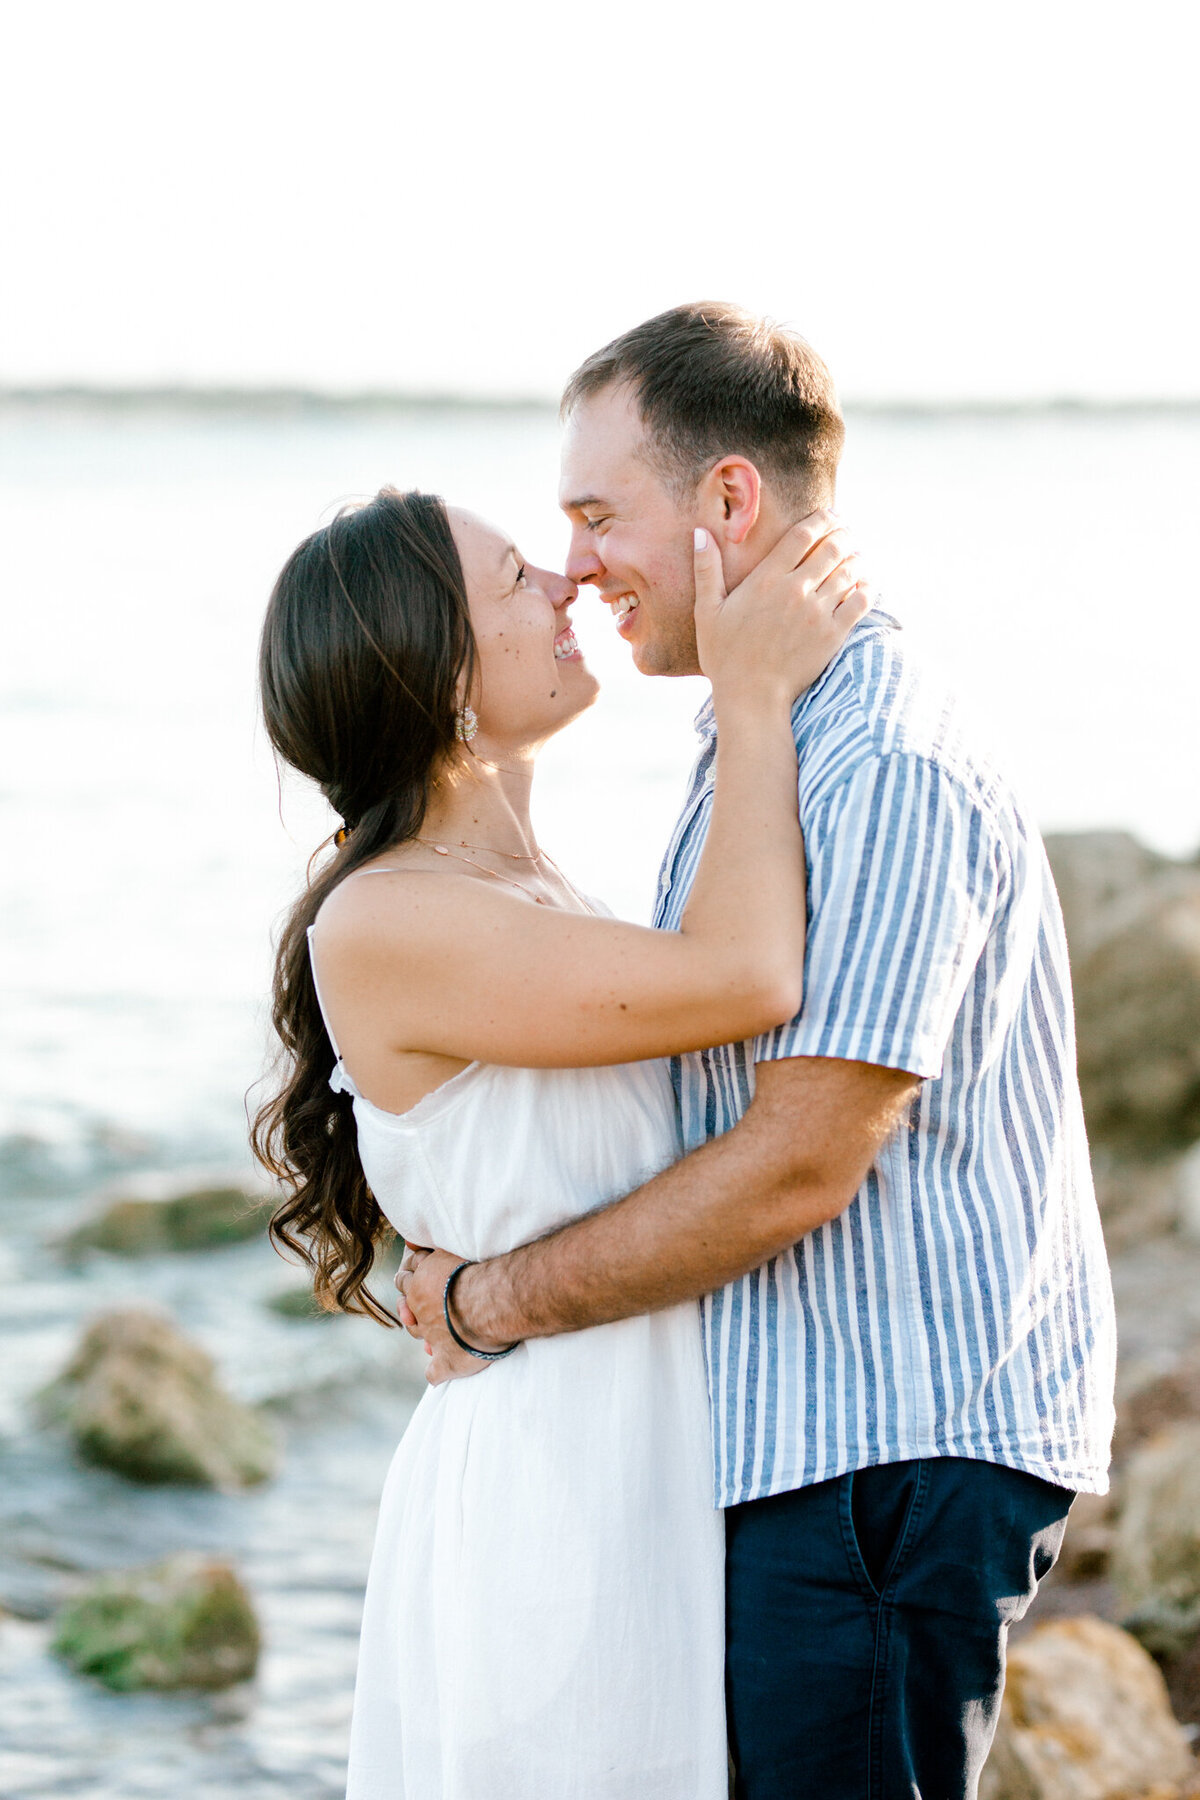 Elise & John Engagements at Rockledge Park Lake Grapevine | Dallas Wedding Photographer | Sami Kathryn Photography-3